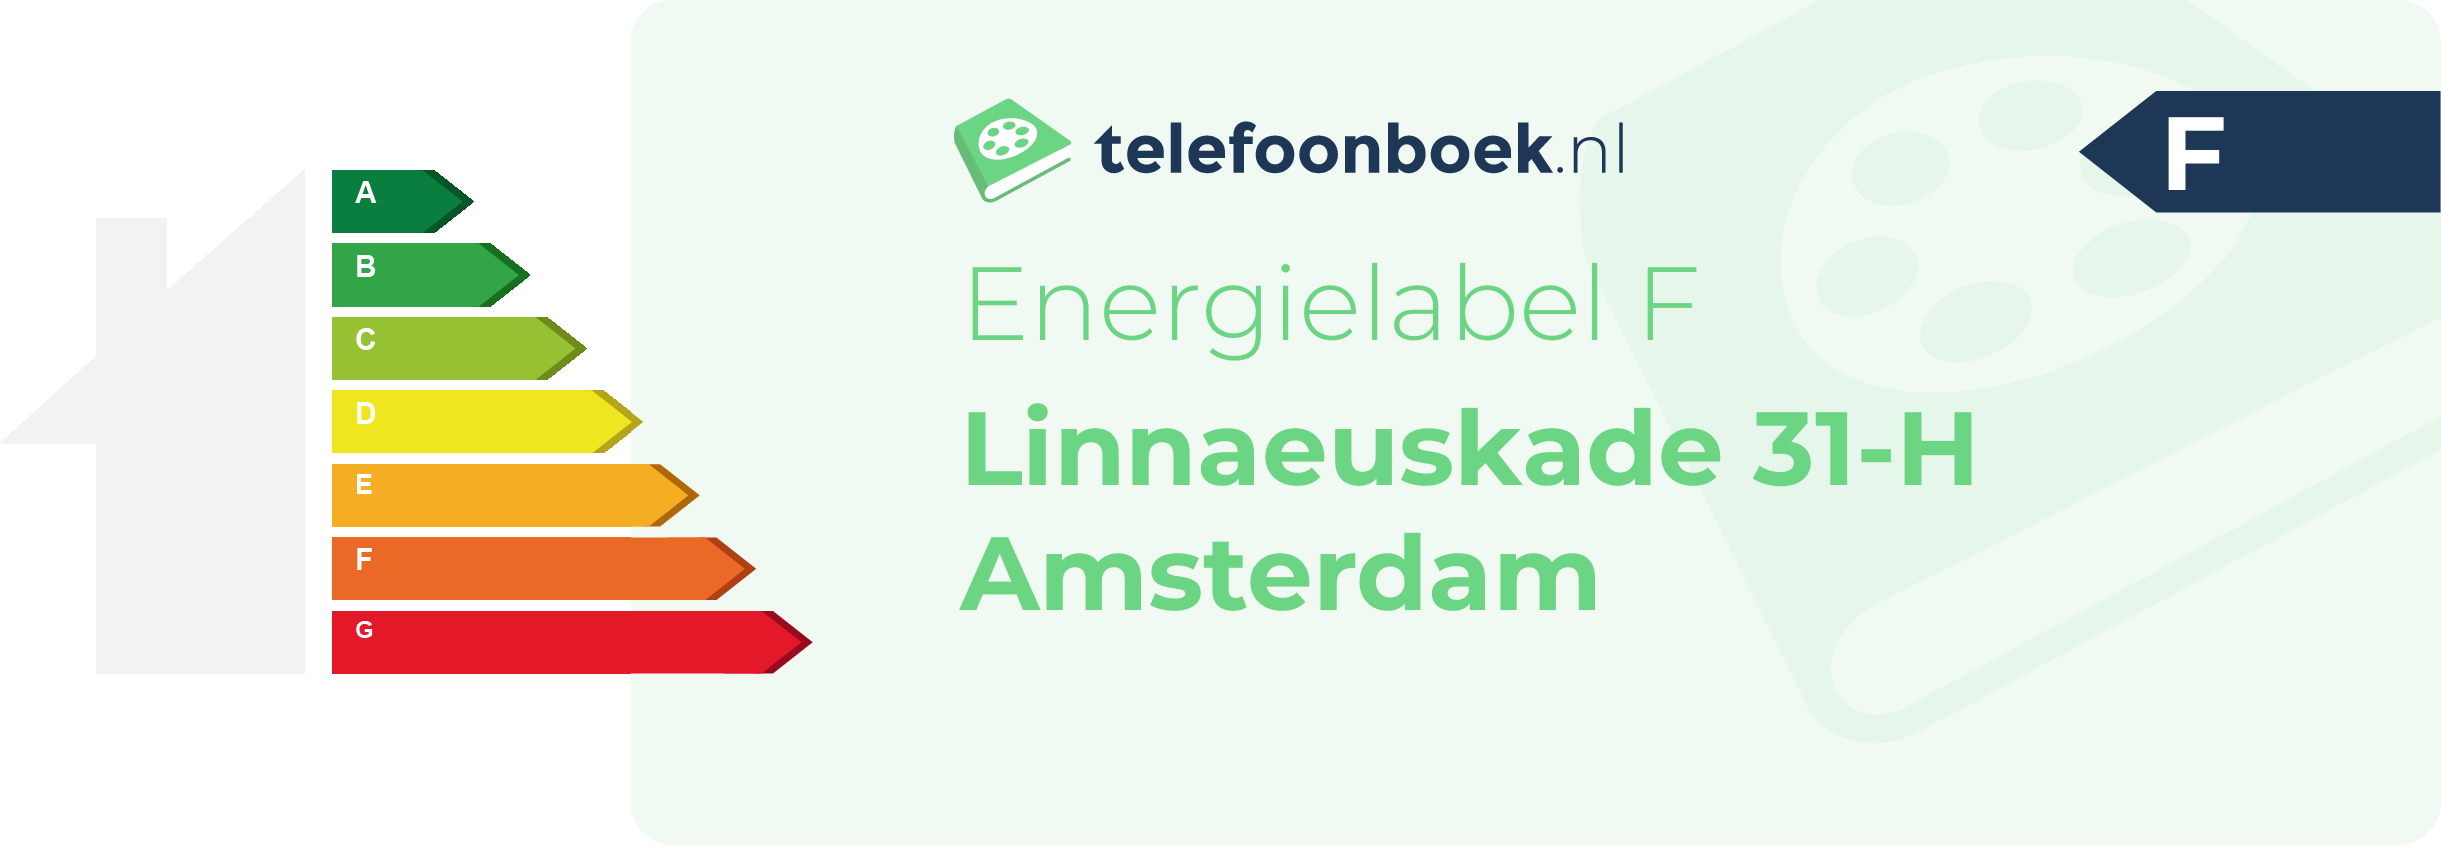 Energielabel Linnaeuskade 31-H Amsterdam